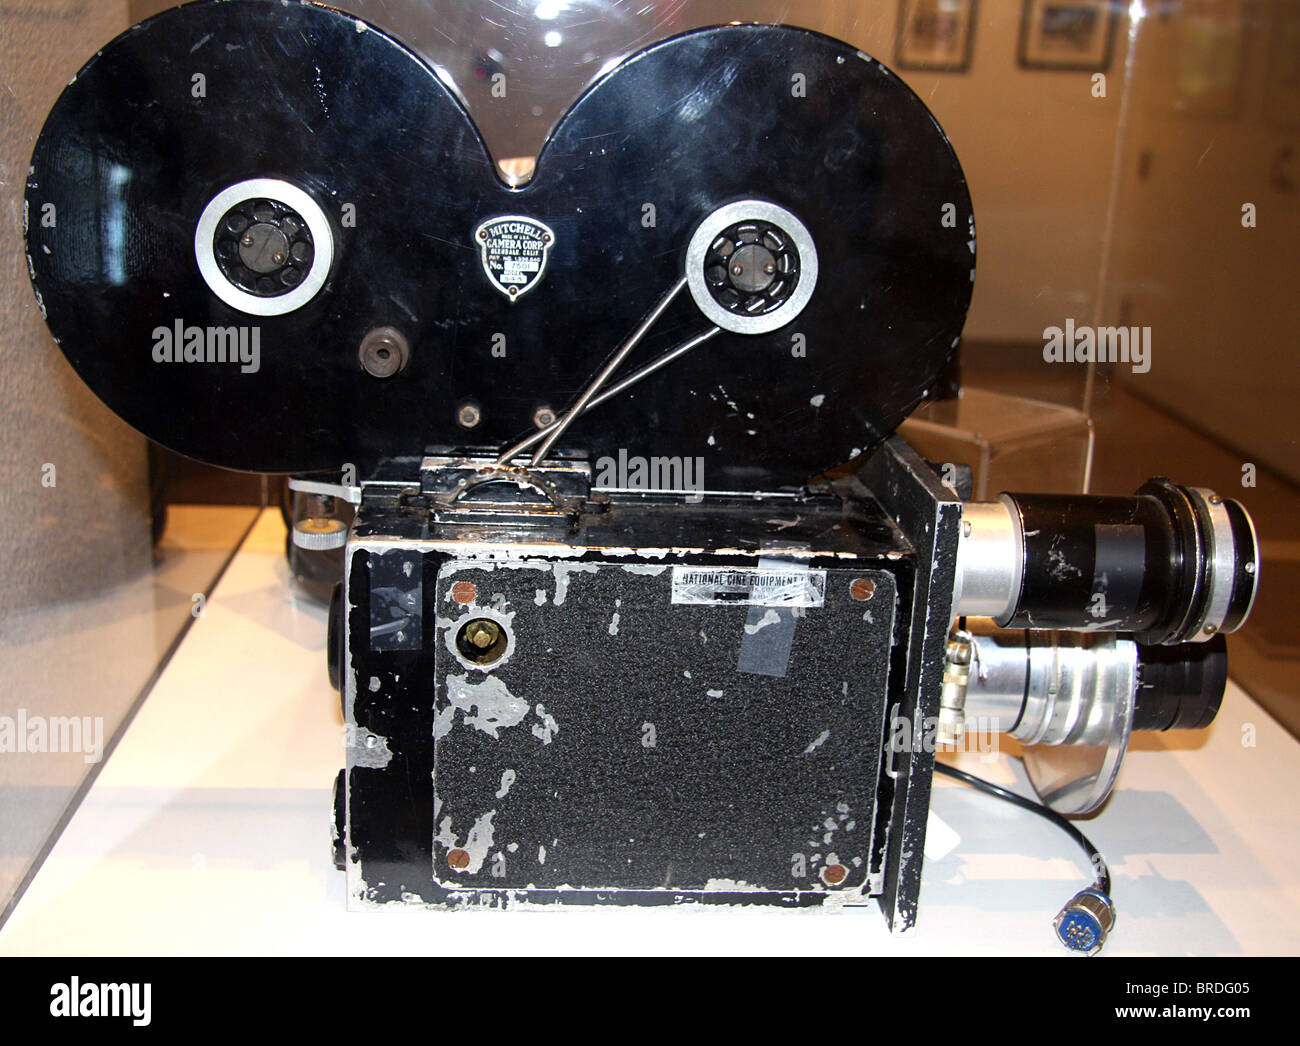 35mm Filmkamera professionellen studio Stockfotografie - Alamy